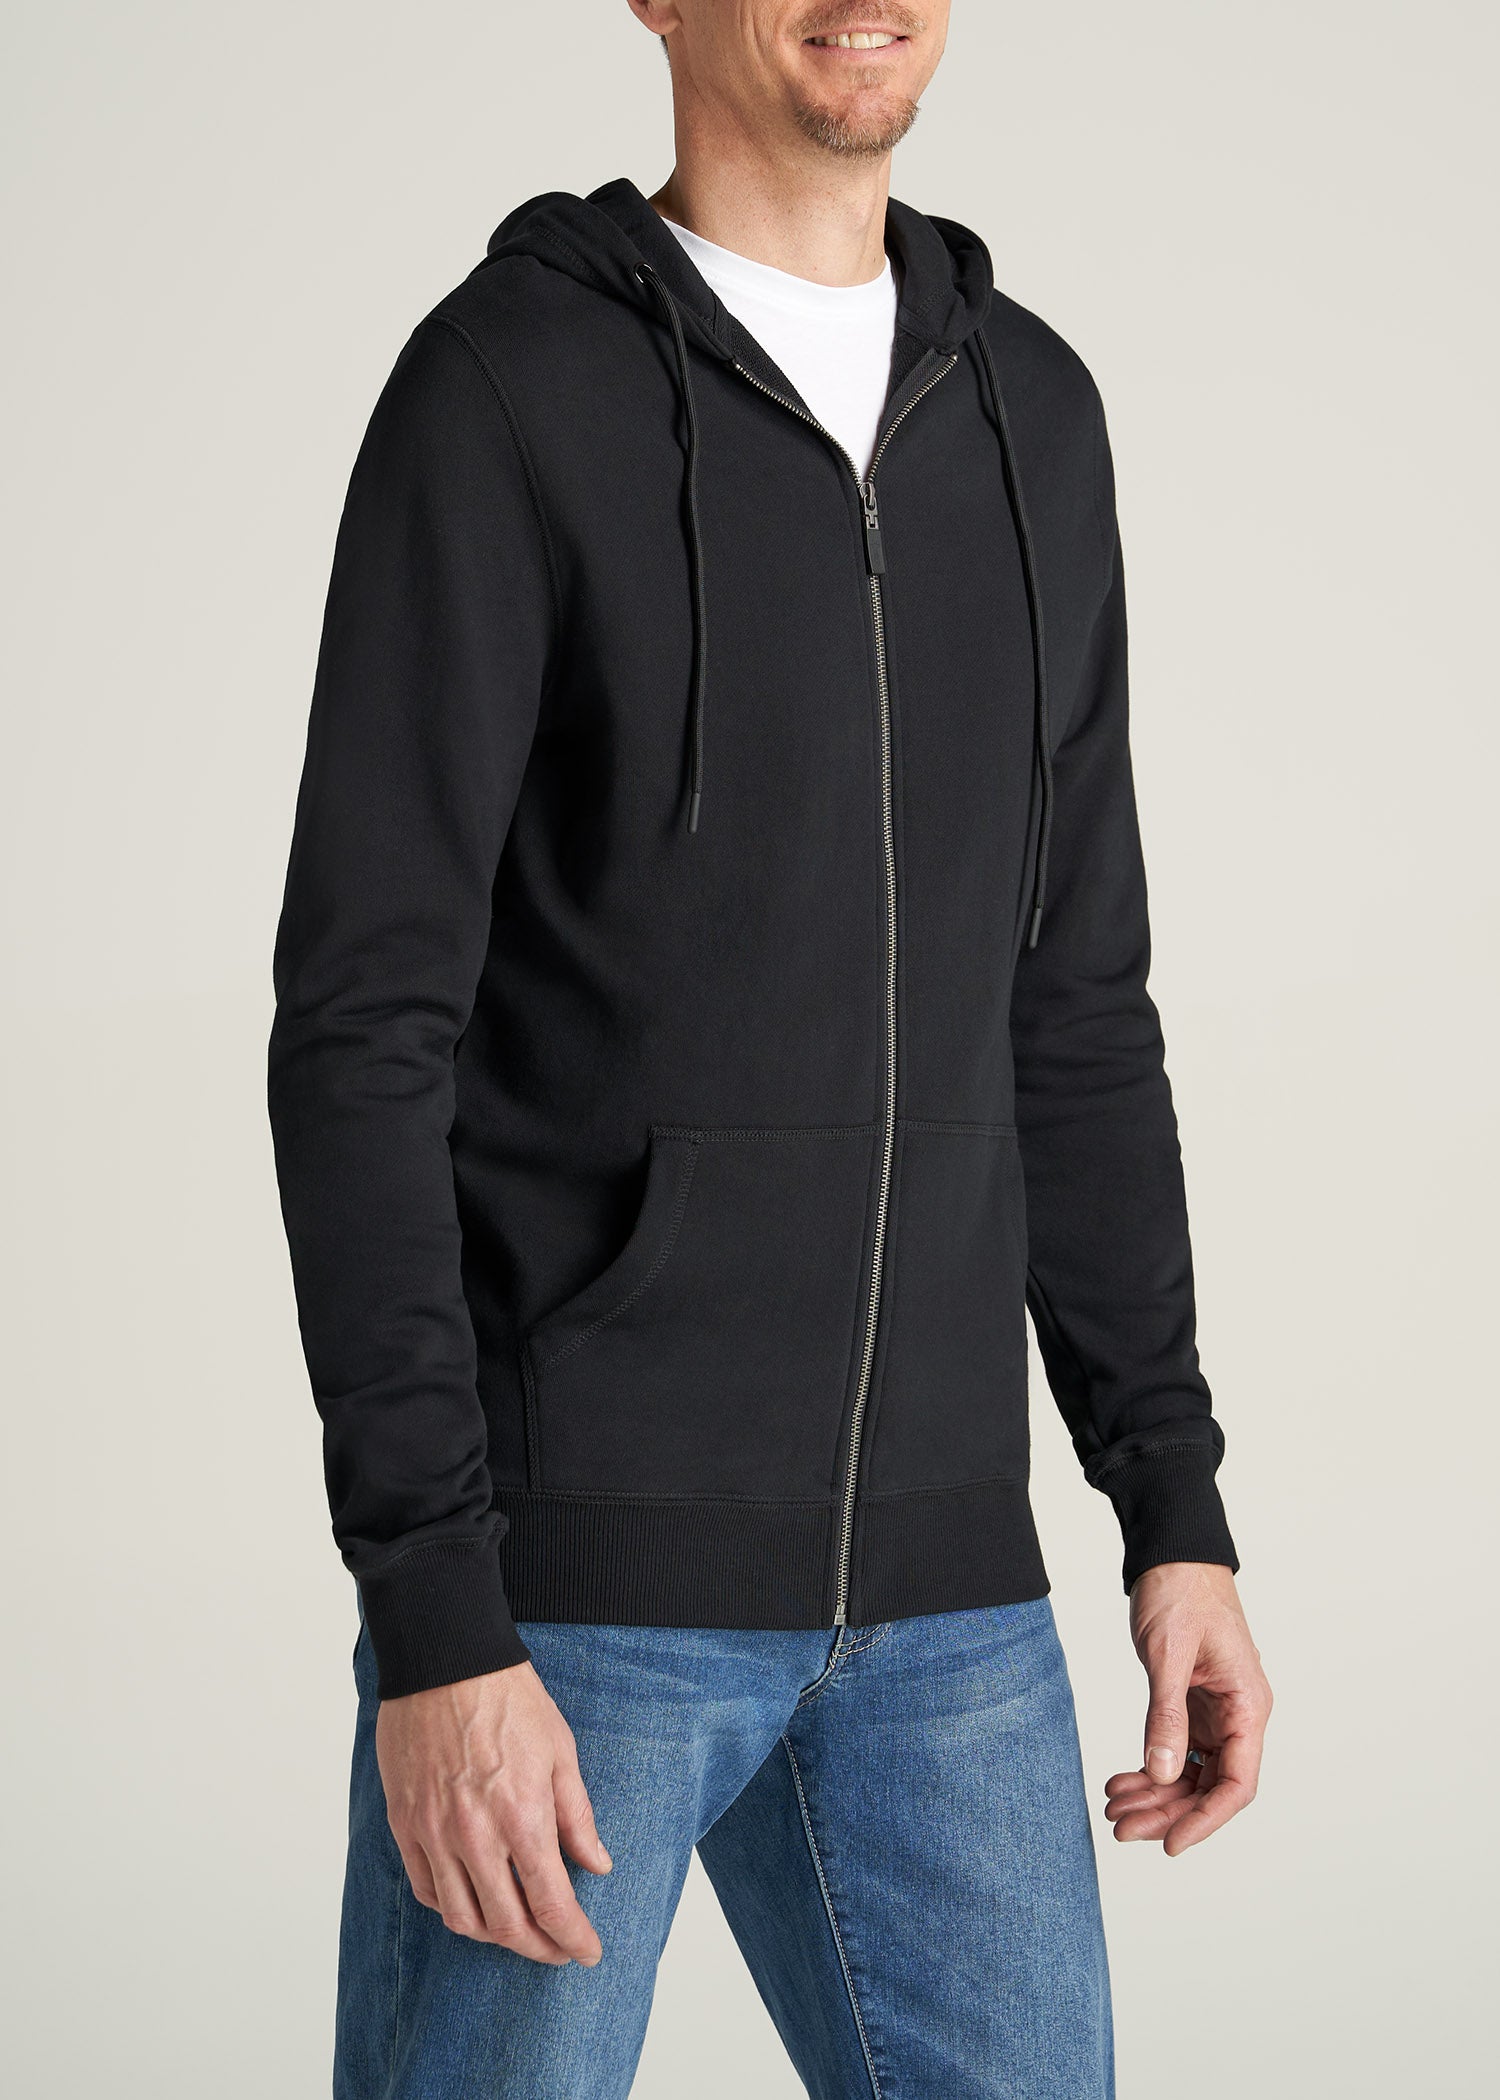 Wearever French Terry Full-Zip Men's Tall Hoodie in Black